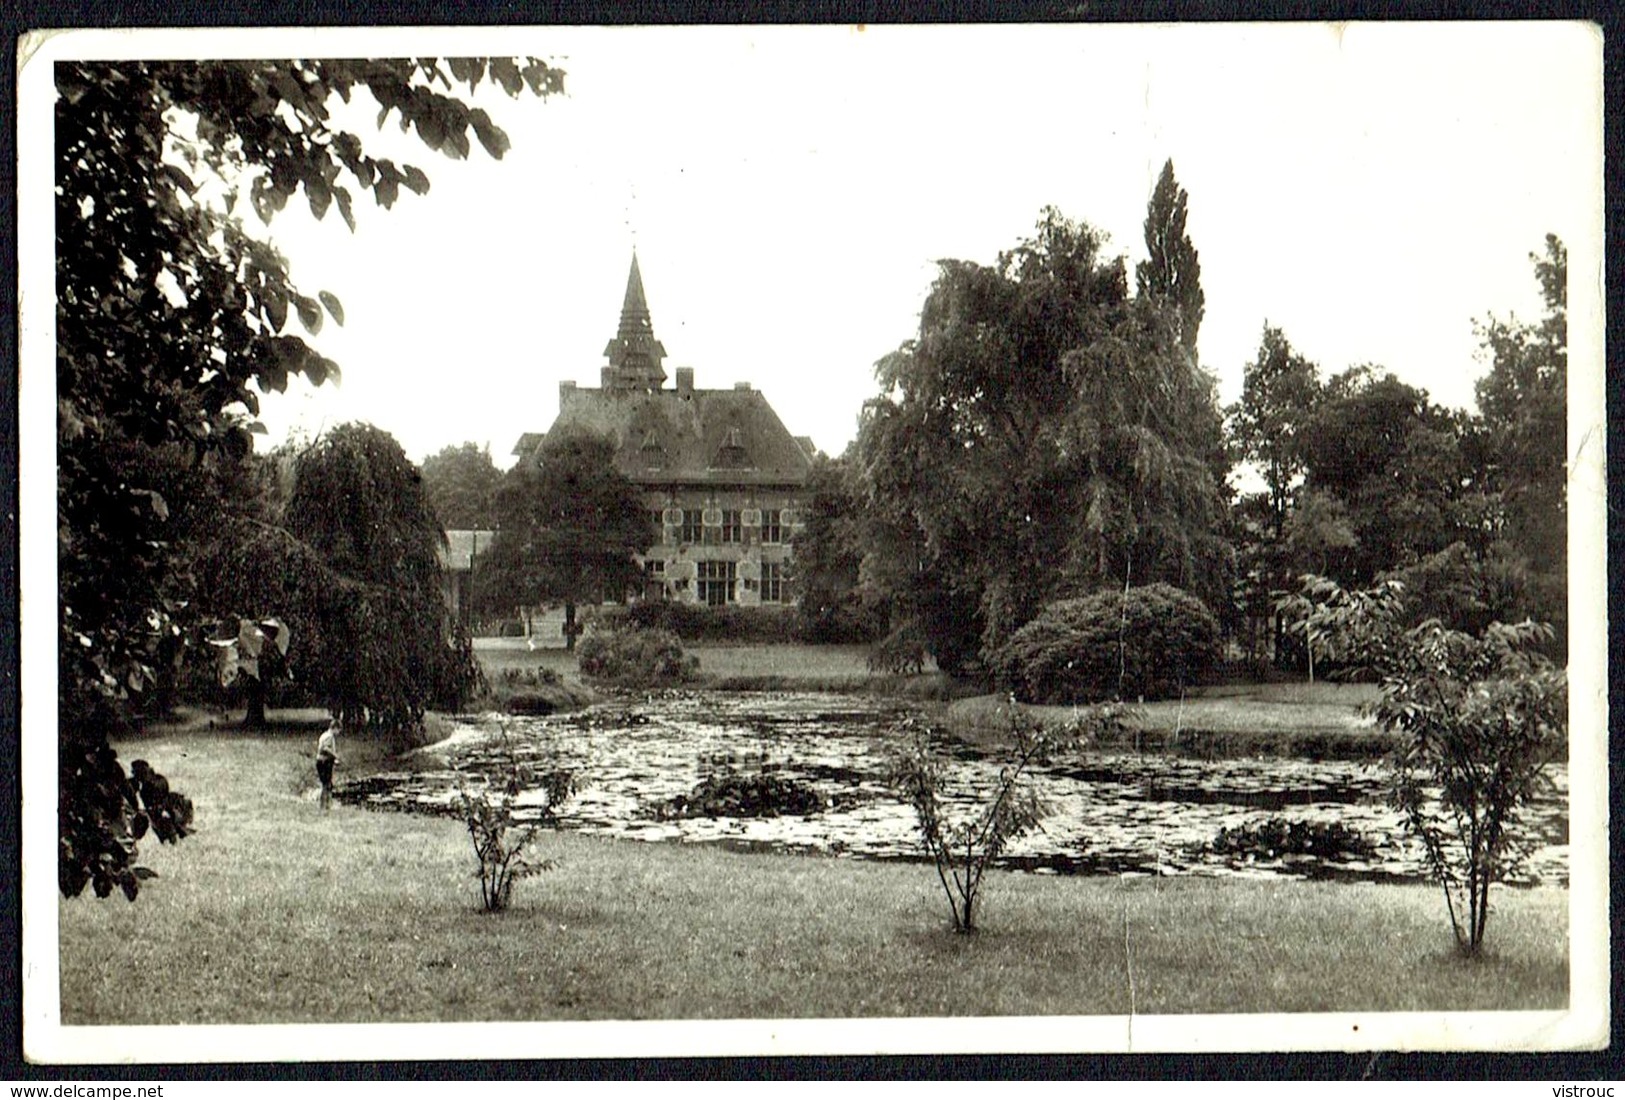 WUUSTWEZEL - Gemeentehuis Met Park - Maison De Repos, Parc - Circulé - Circulated - Gelaufen - 1957. - Wijnegem